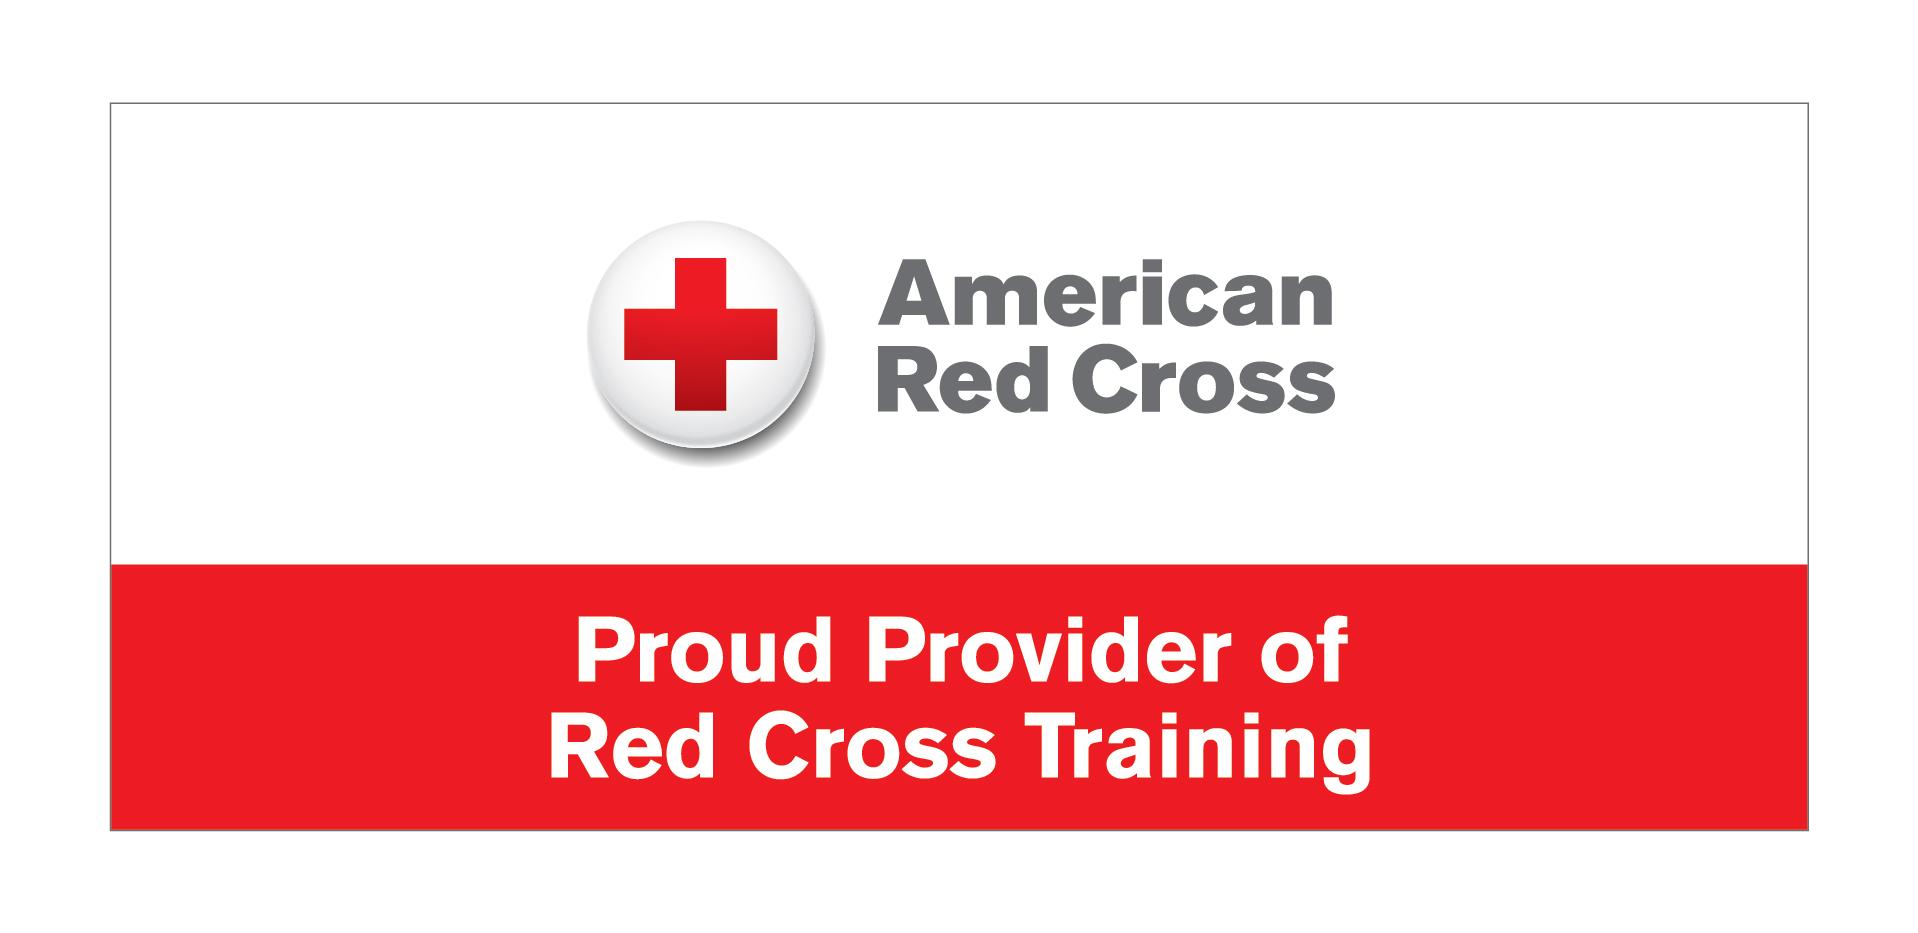 American Red Cross training graphic